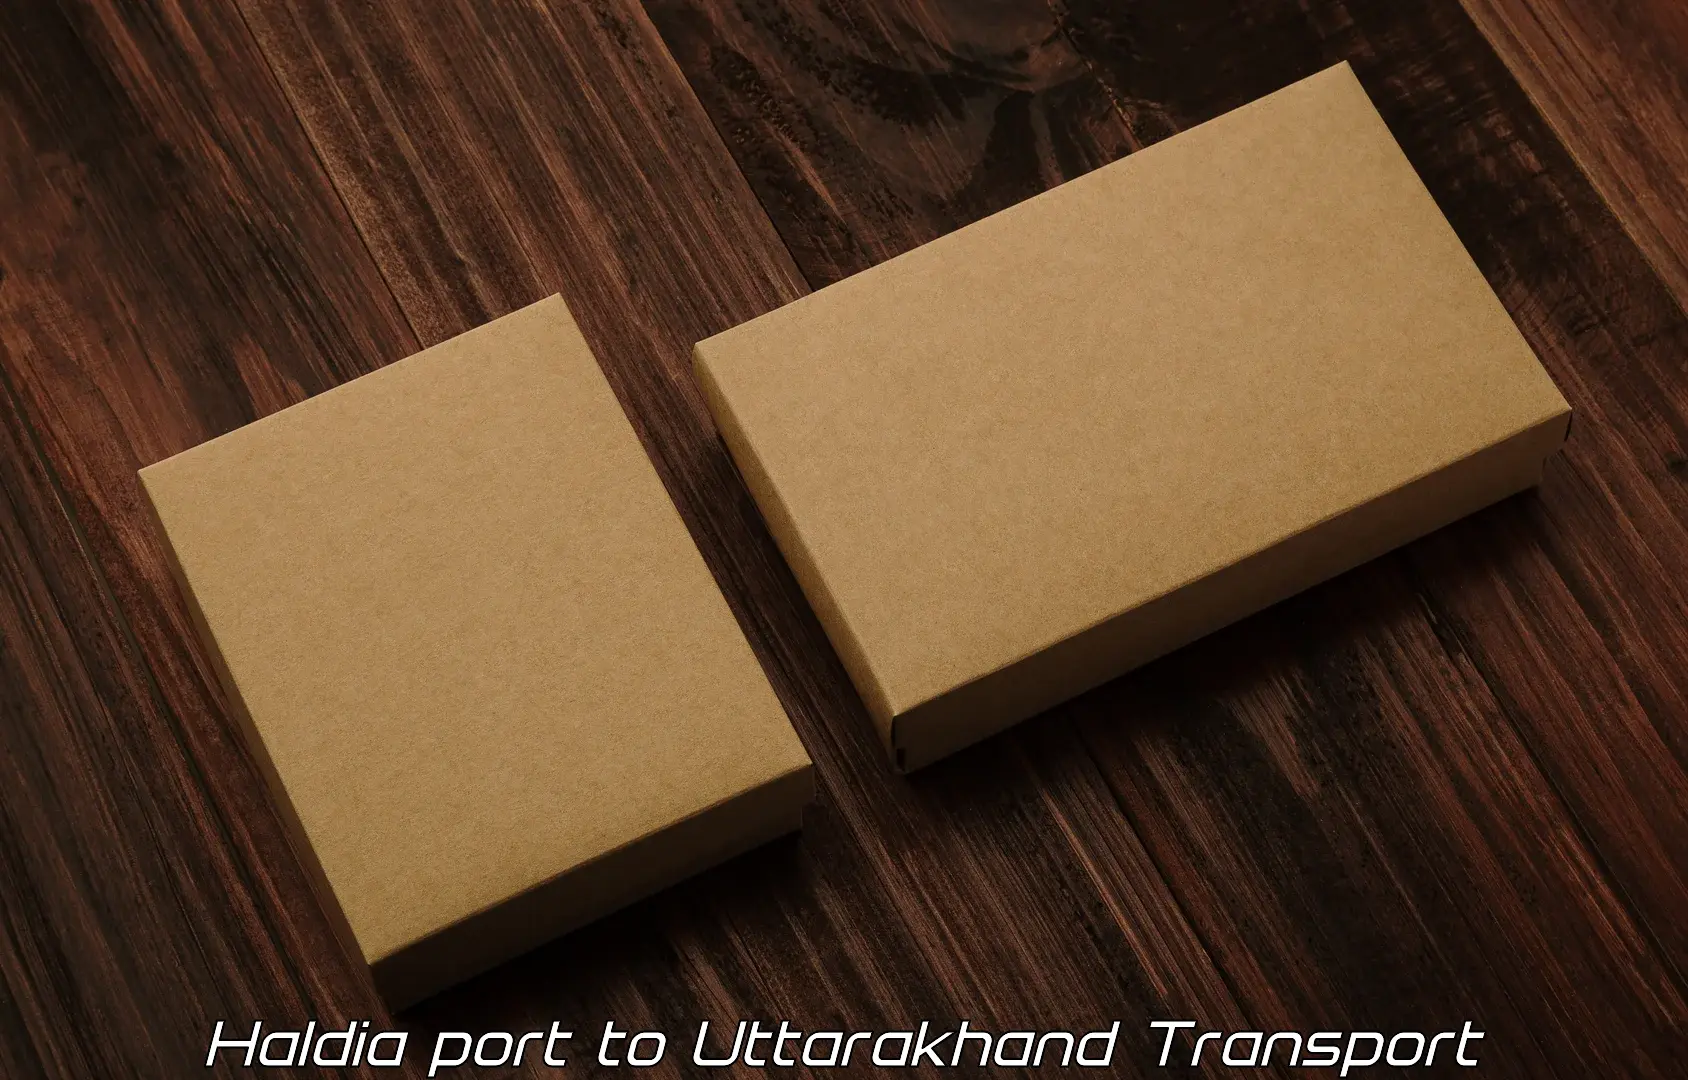 Cycle transportation service Haldia port to Uttarakhand